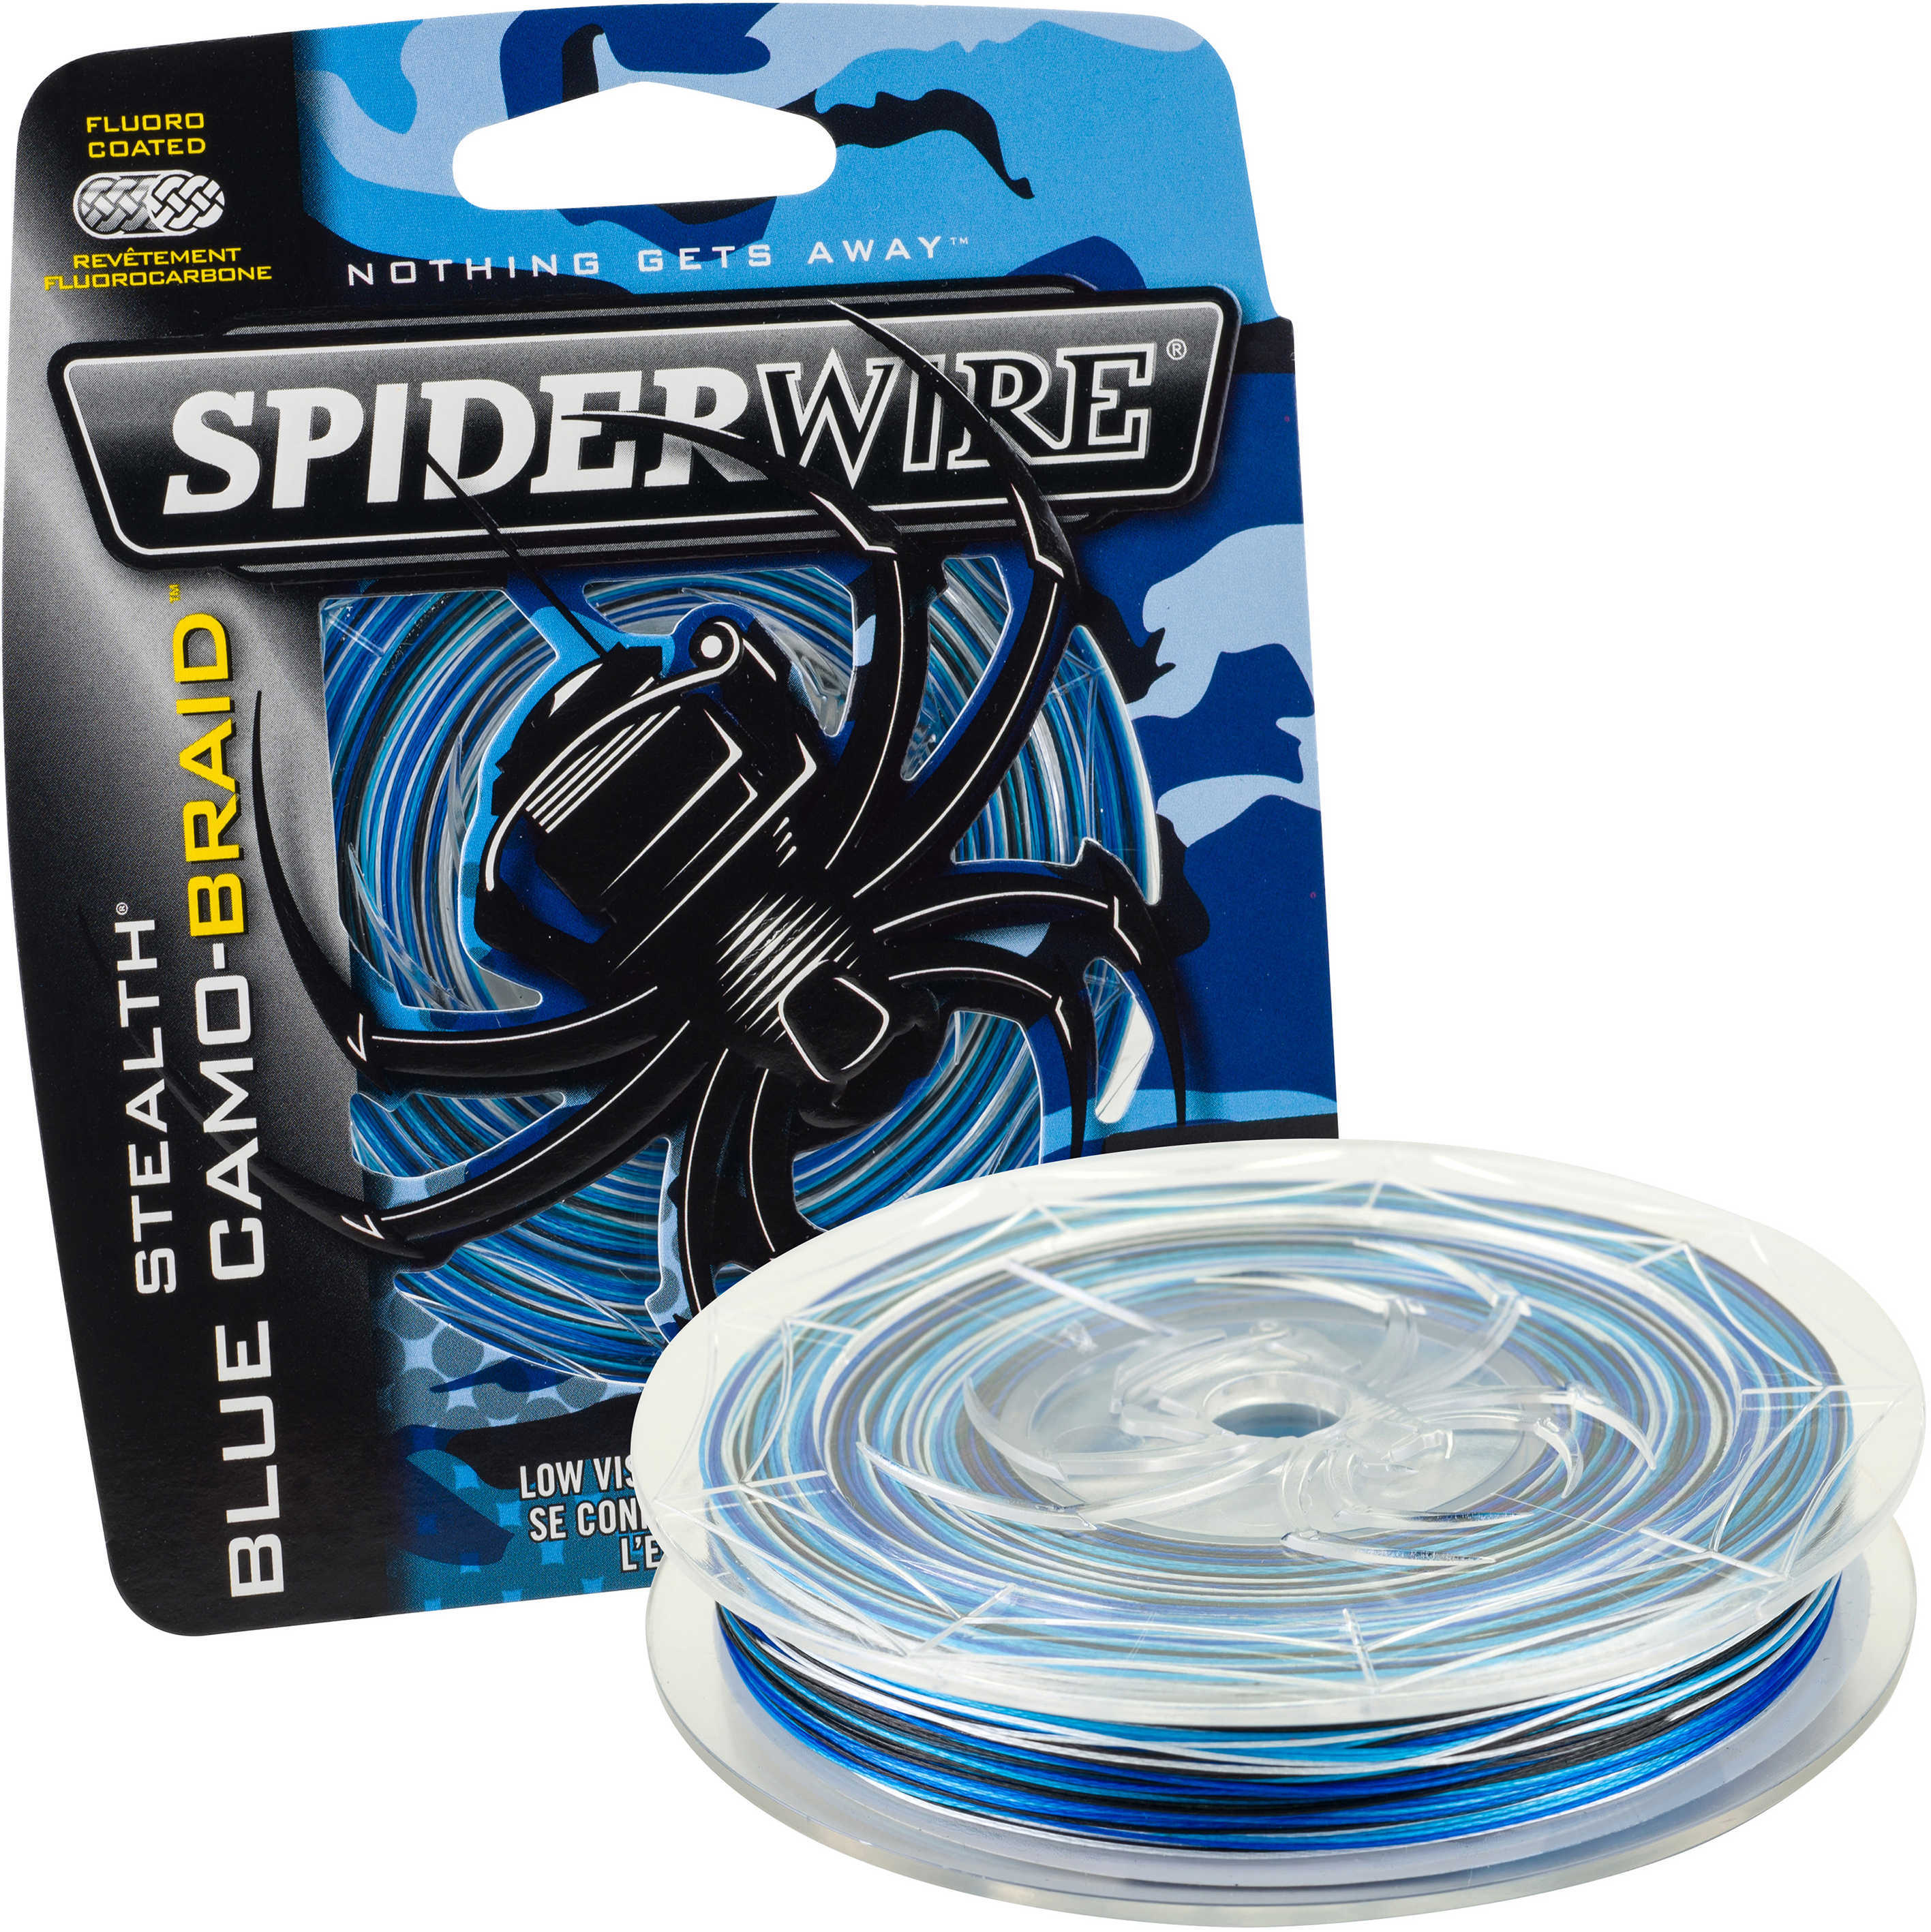 Spiderwire Stealth Braid 200 Yards , 50 lbs Strength, 0.014" Diameter, Blue Camo Md: 1374136